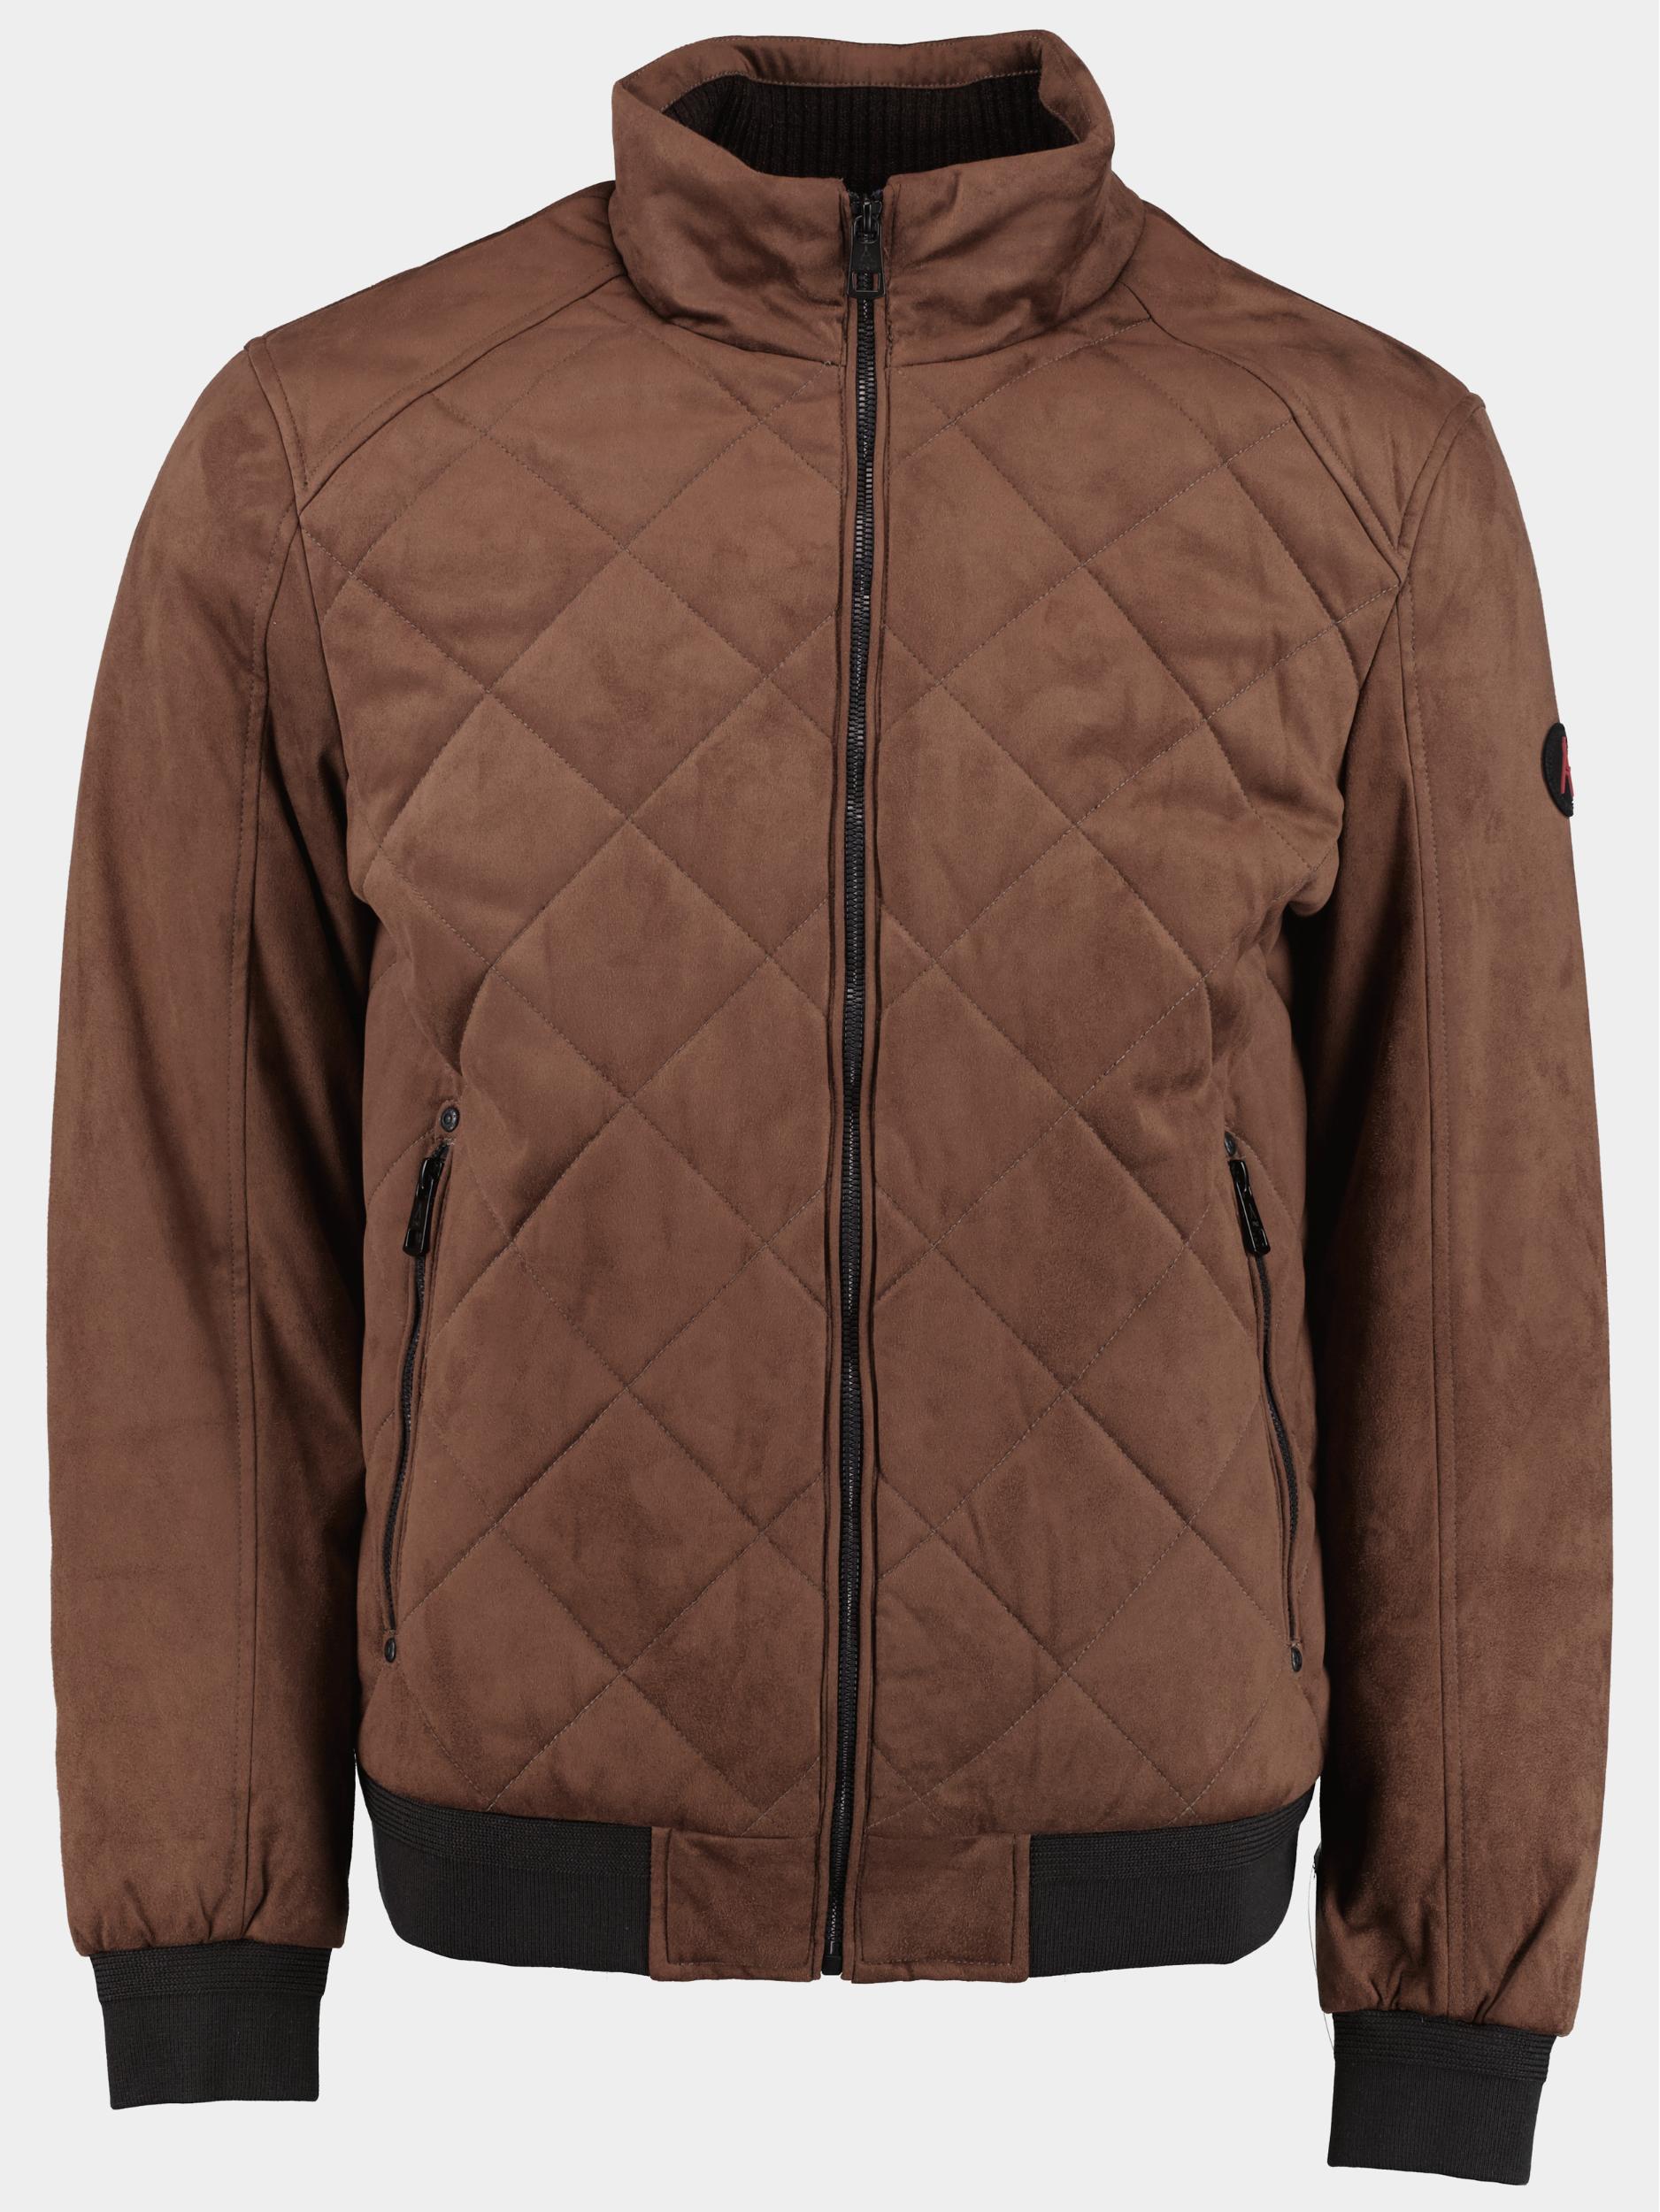 Donders 1860 Winterjack Bruin Textile jacket 21731/541